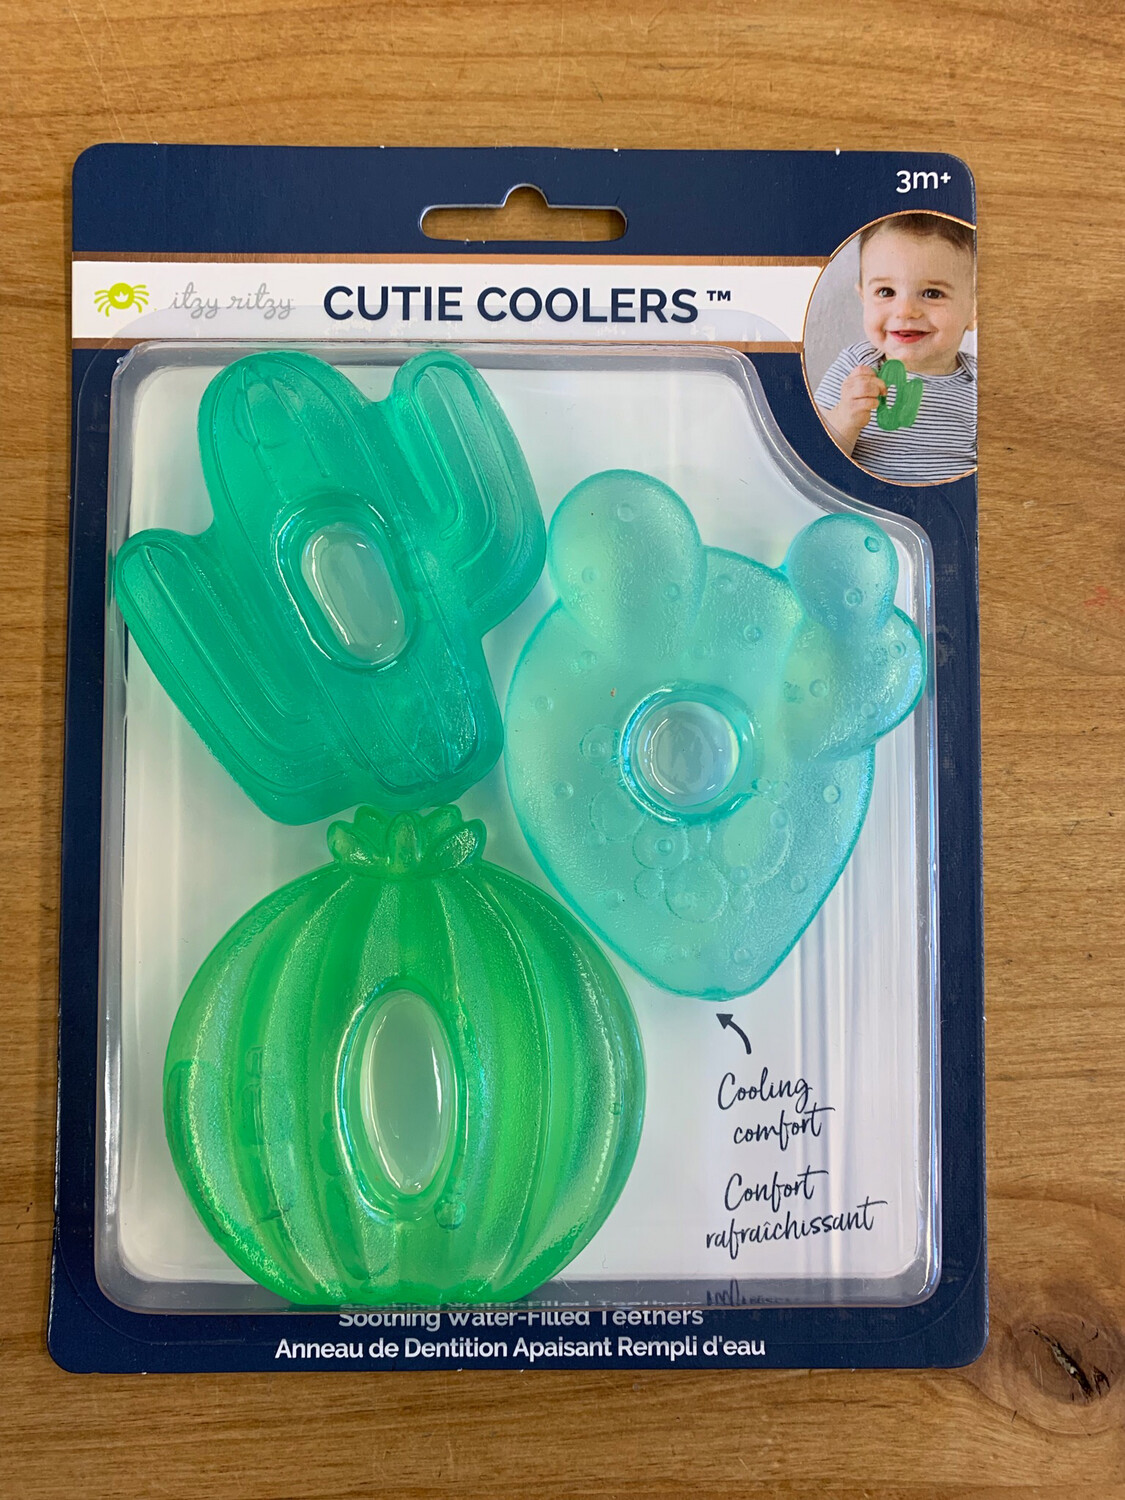 Cutie Coolers Cactus Teethers